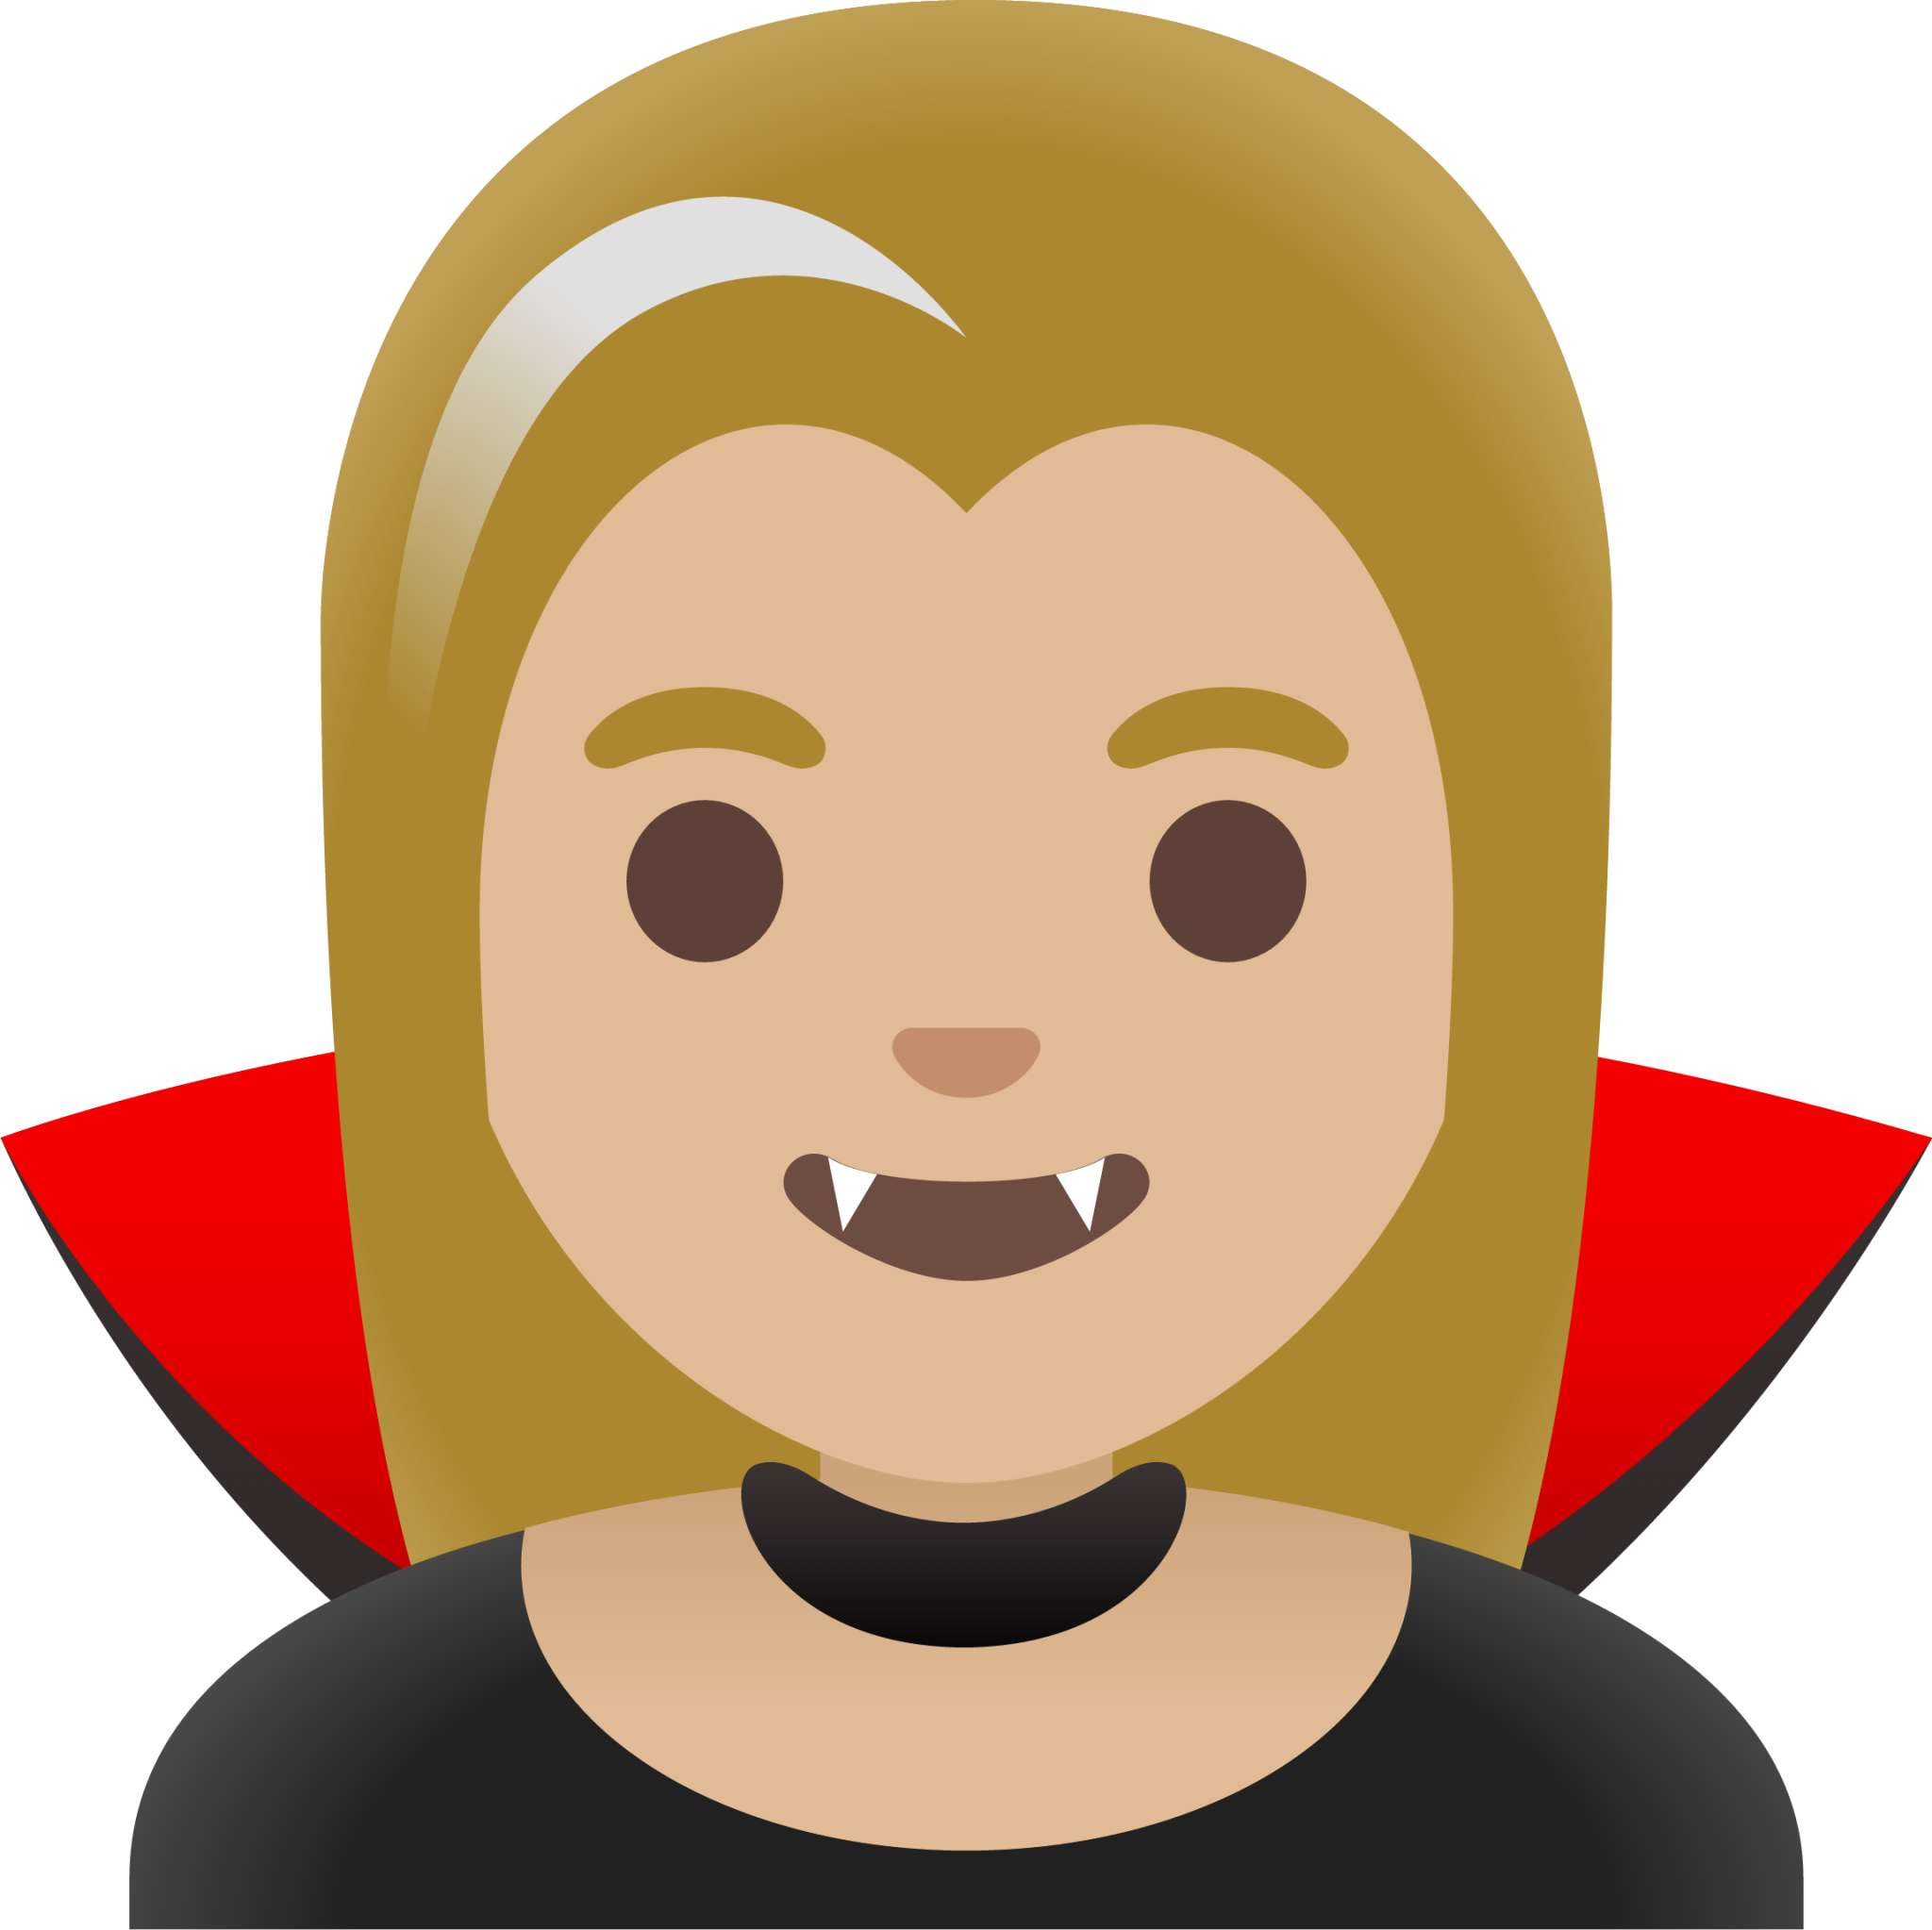 woman vampire: medium-light skin tone emoji